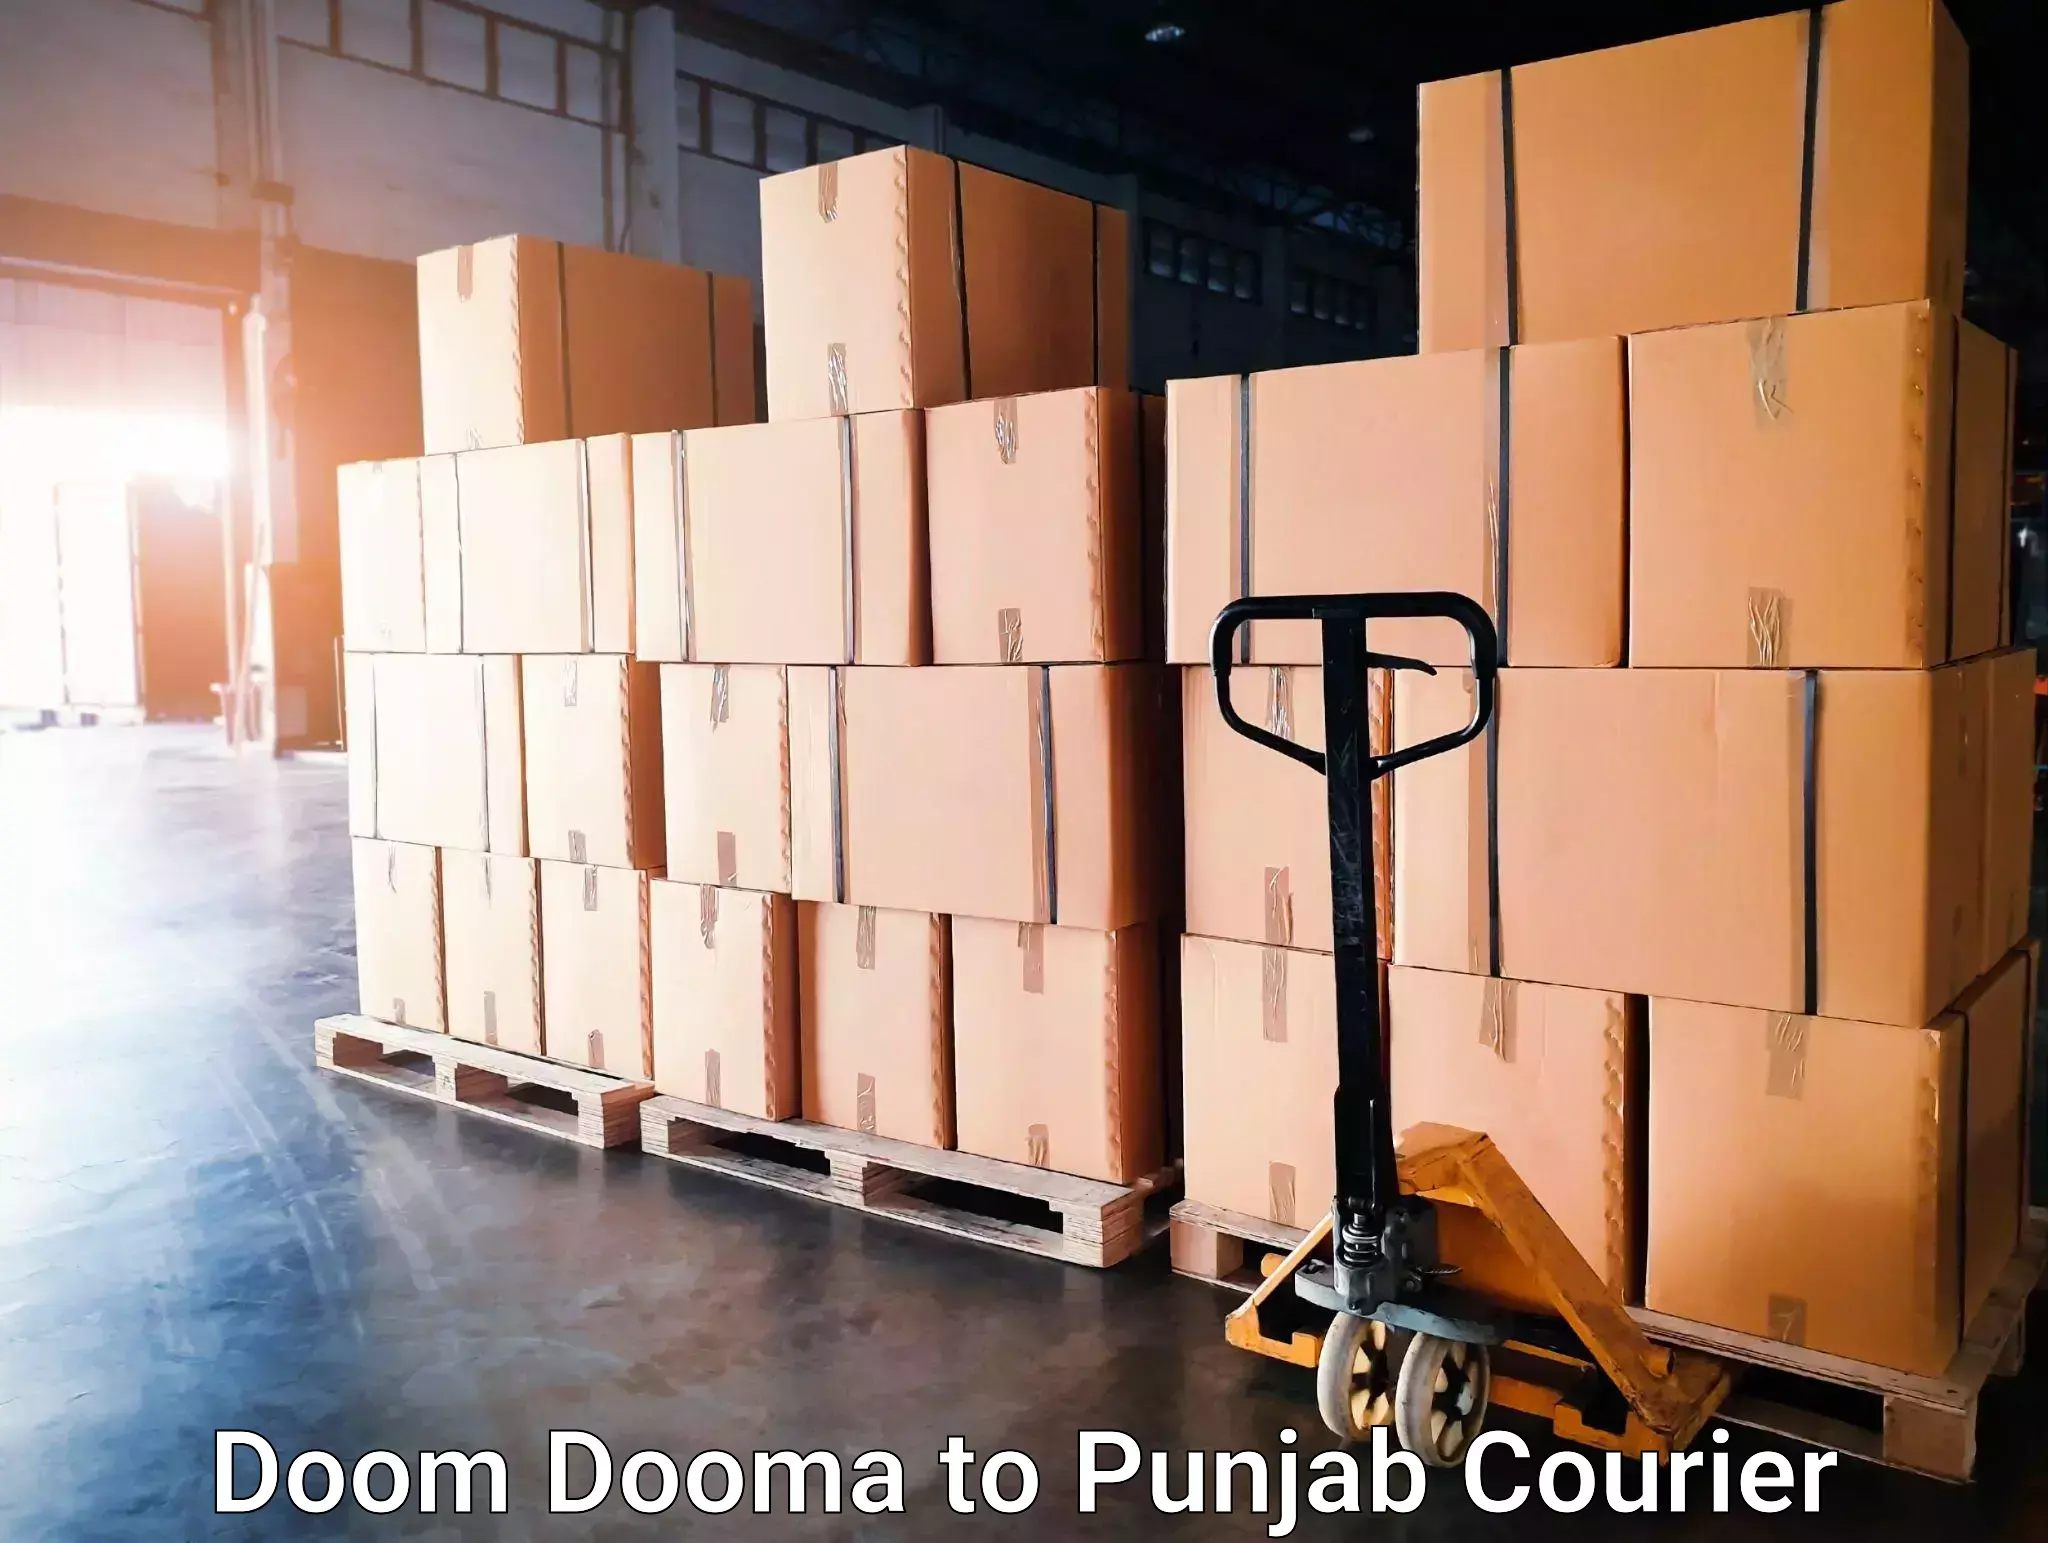 Doorstep parcel pickup Doom Dooma to Punjab